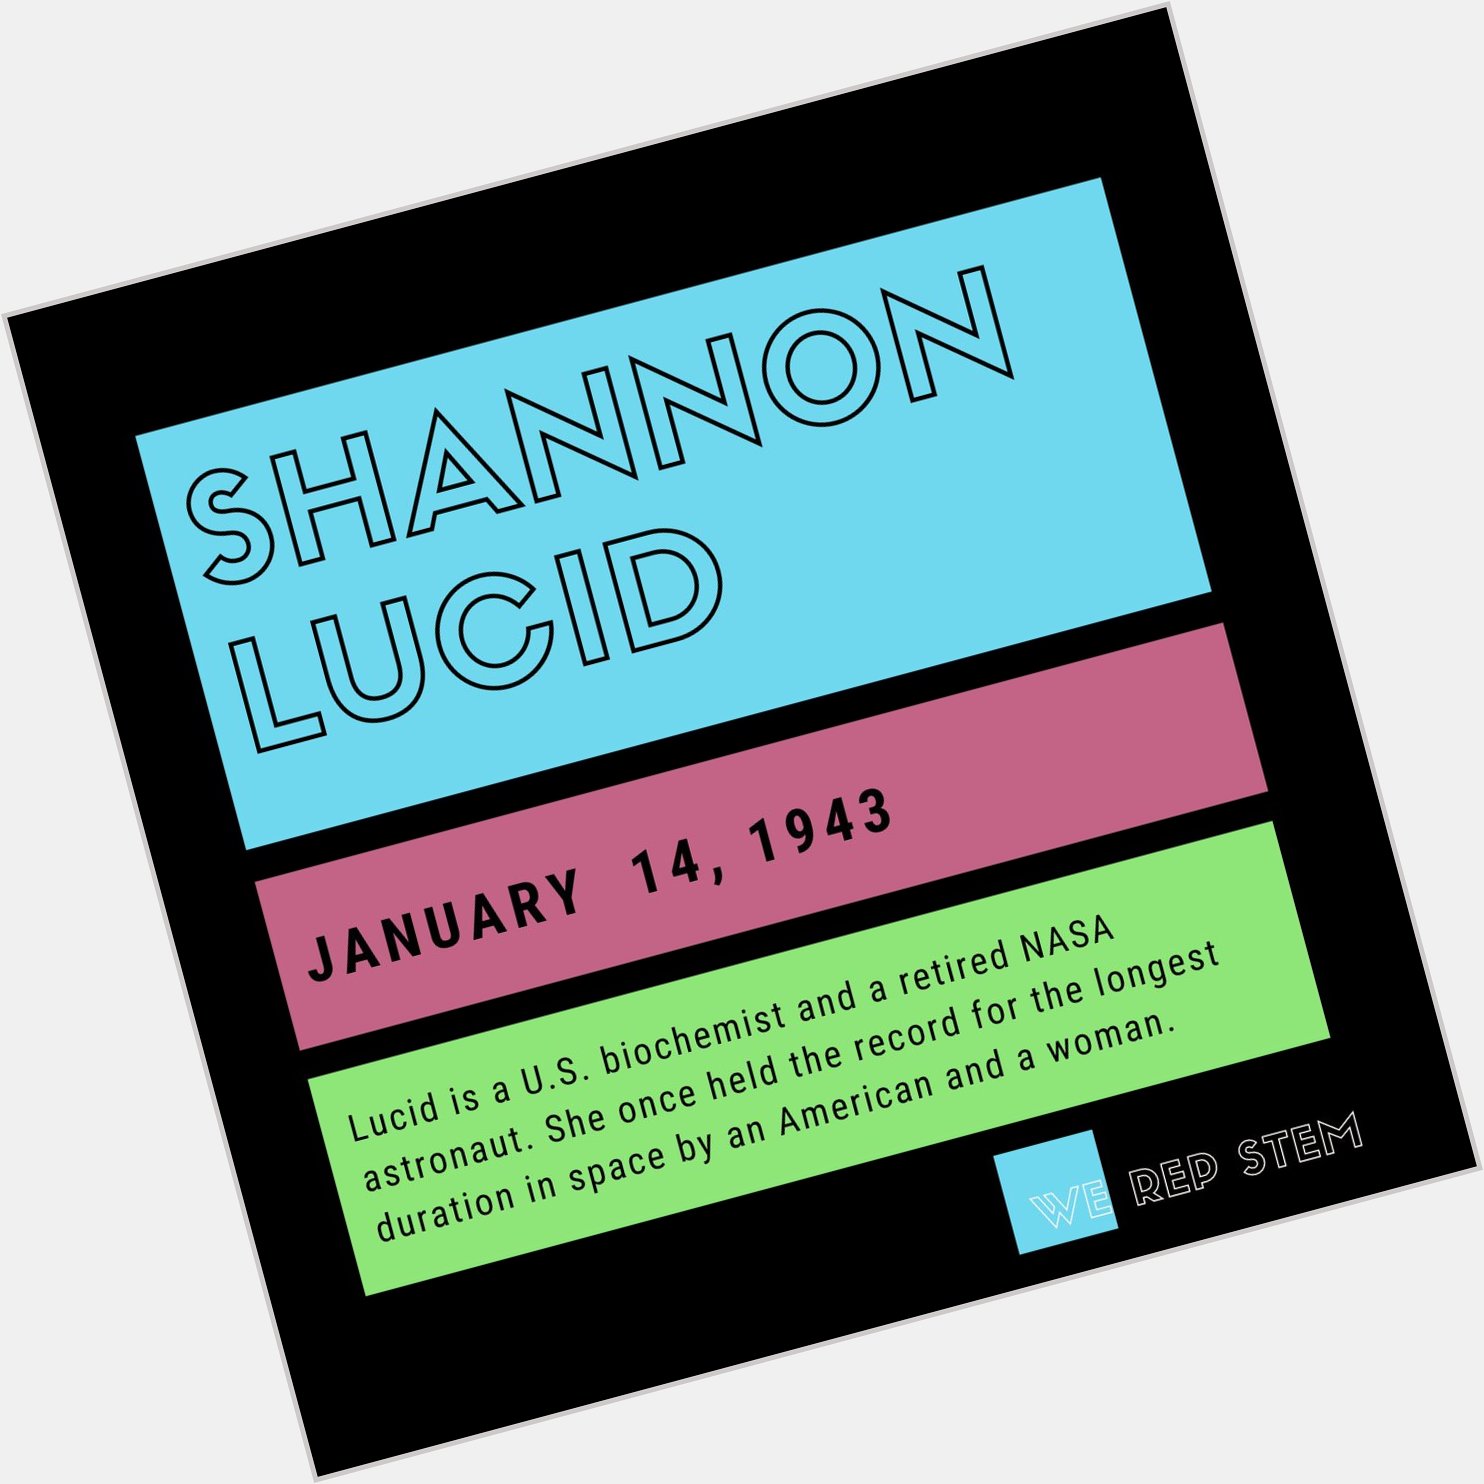 Happy birthday to U.S. biochemist and former NASA astronaut Shannon Lucid, born in 1943. 